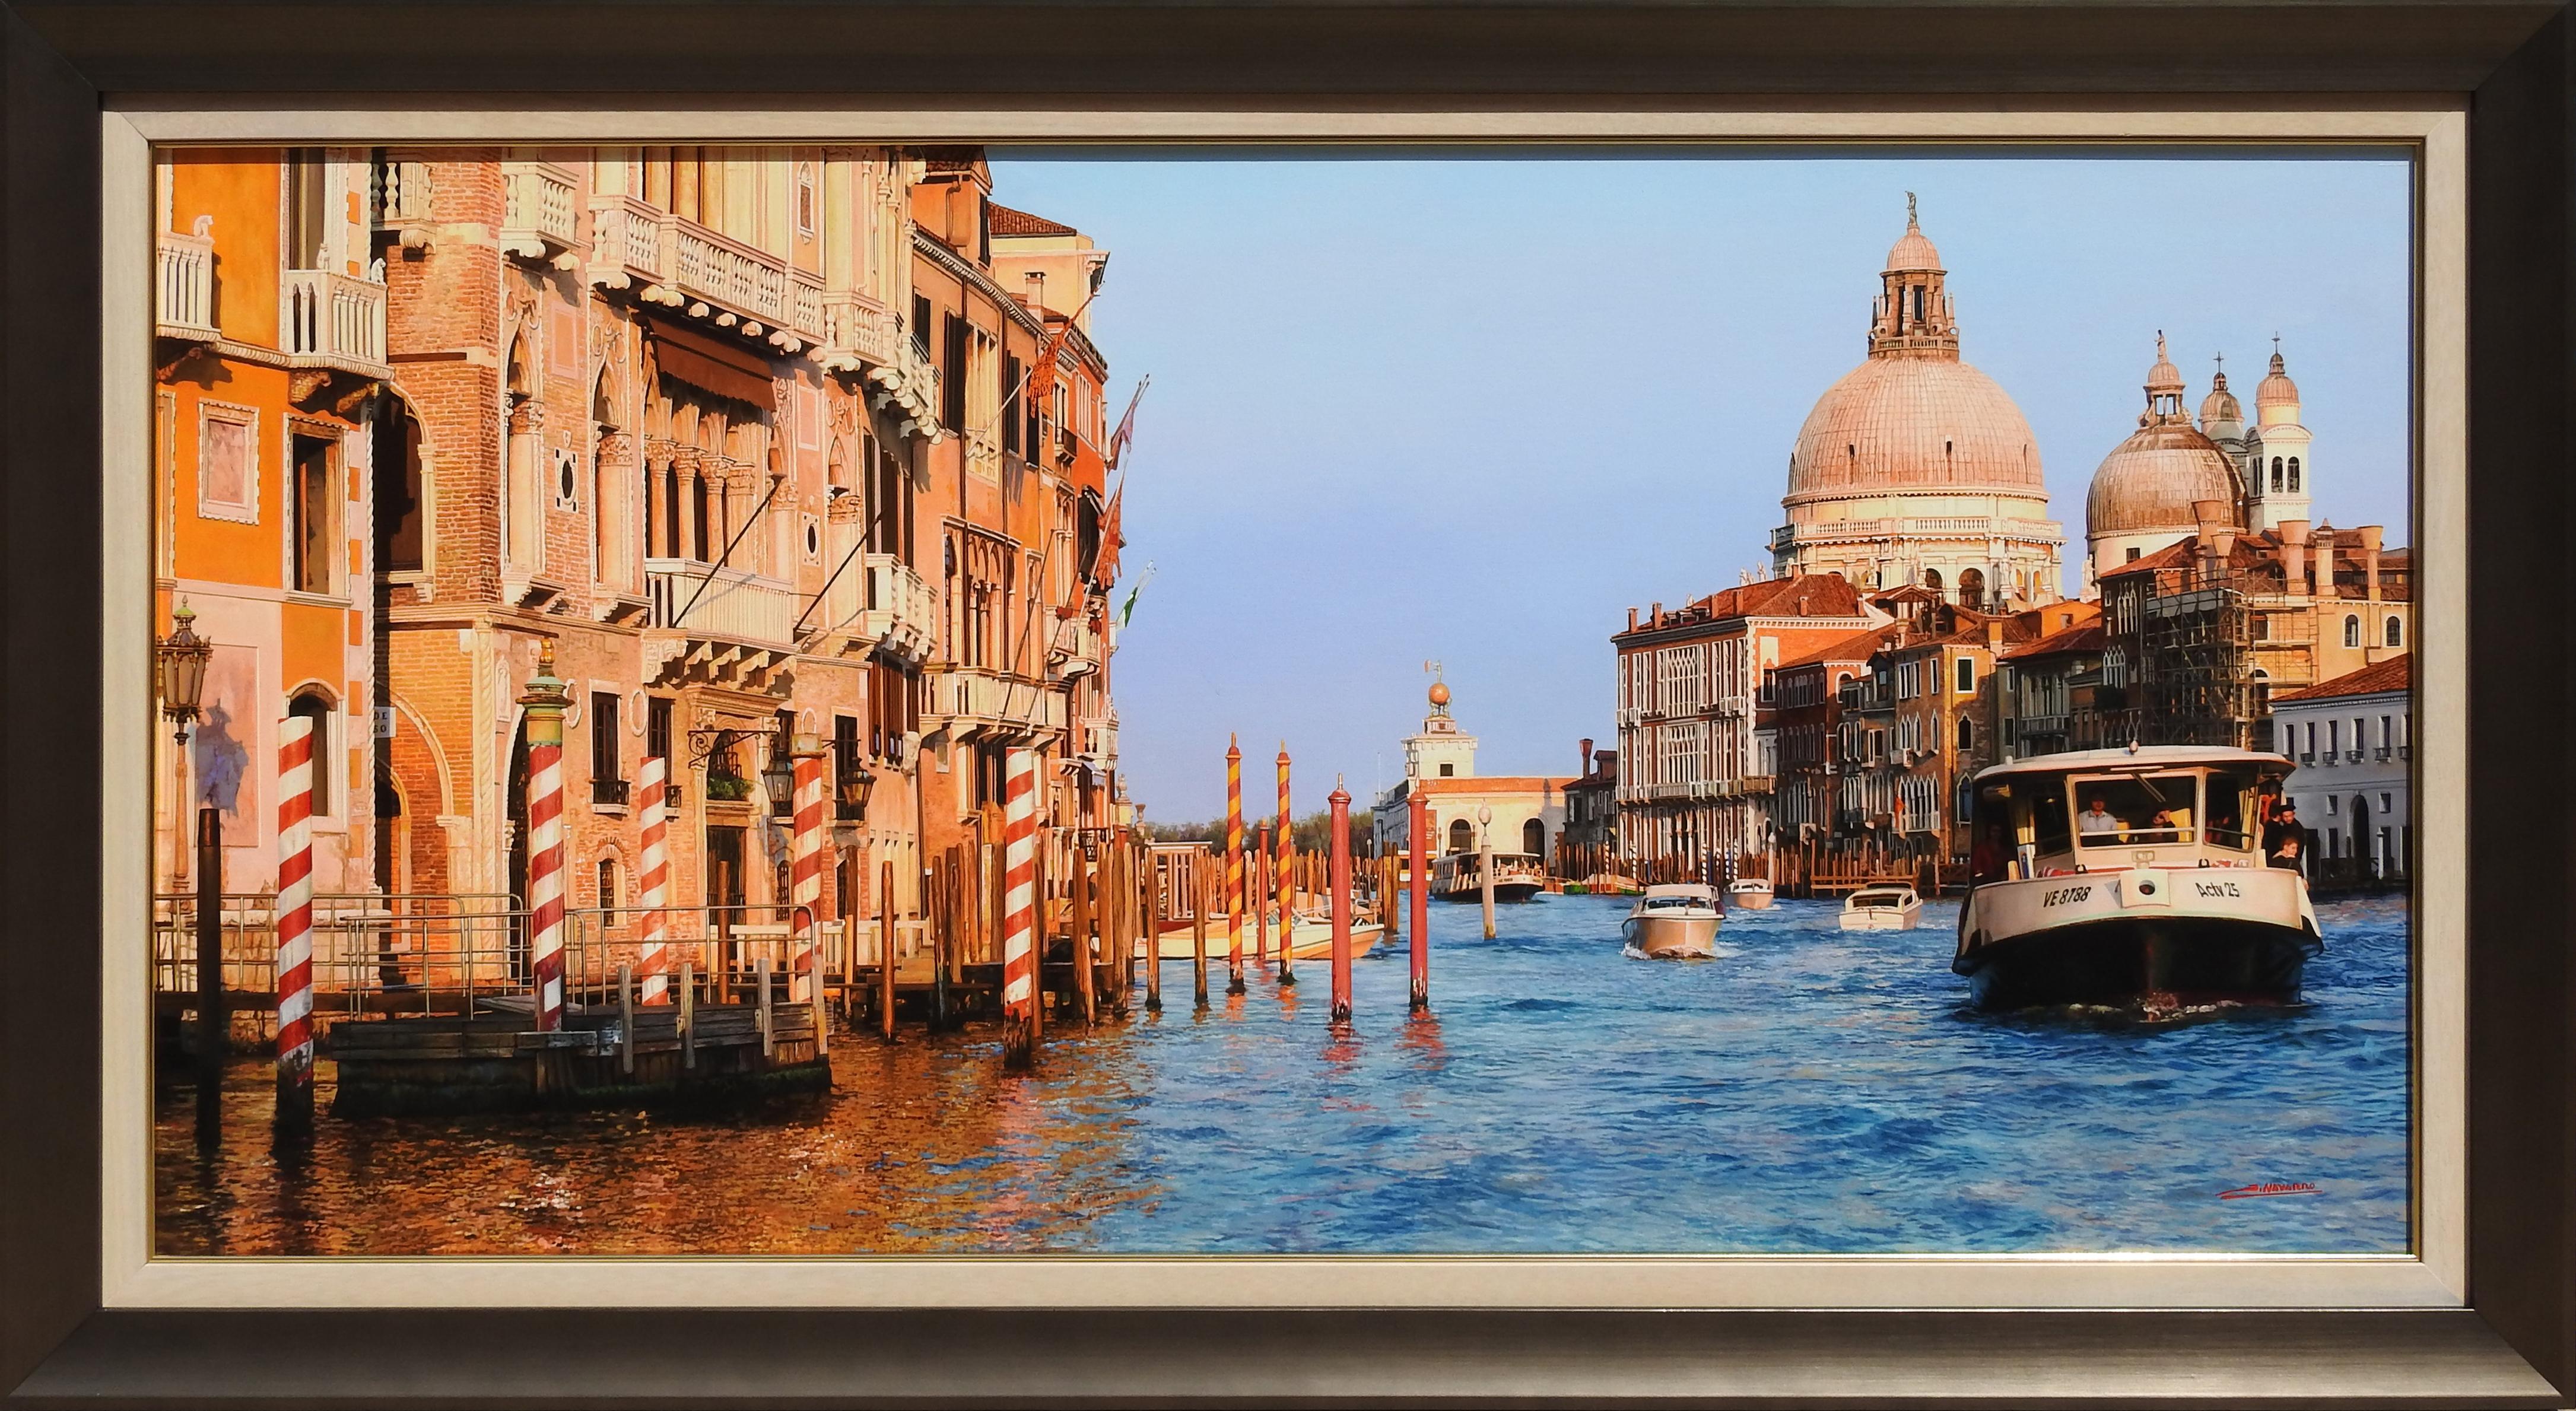 "Venice", Jesus Navarro, Realism, 24x47 in., Original Oil Canvas, Blue, Italy